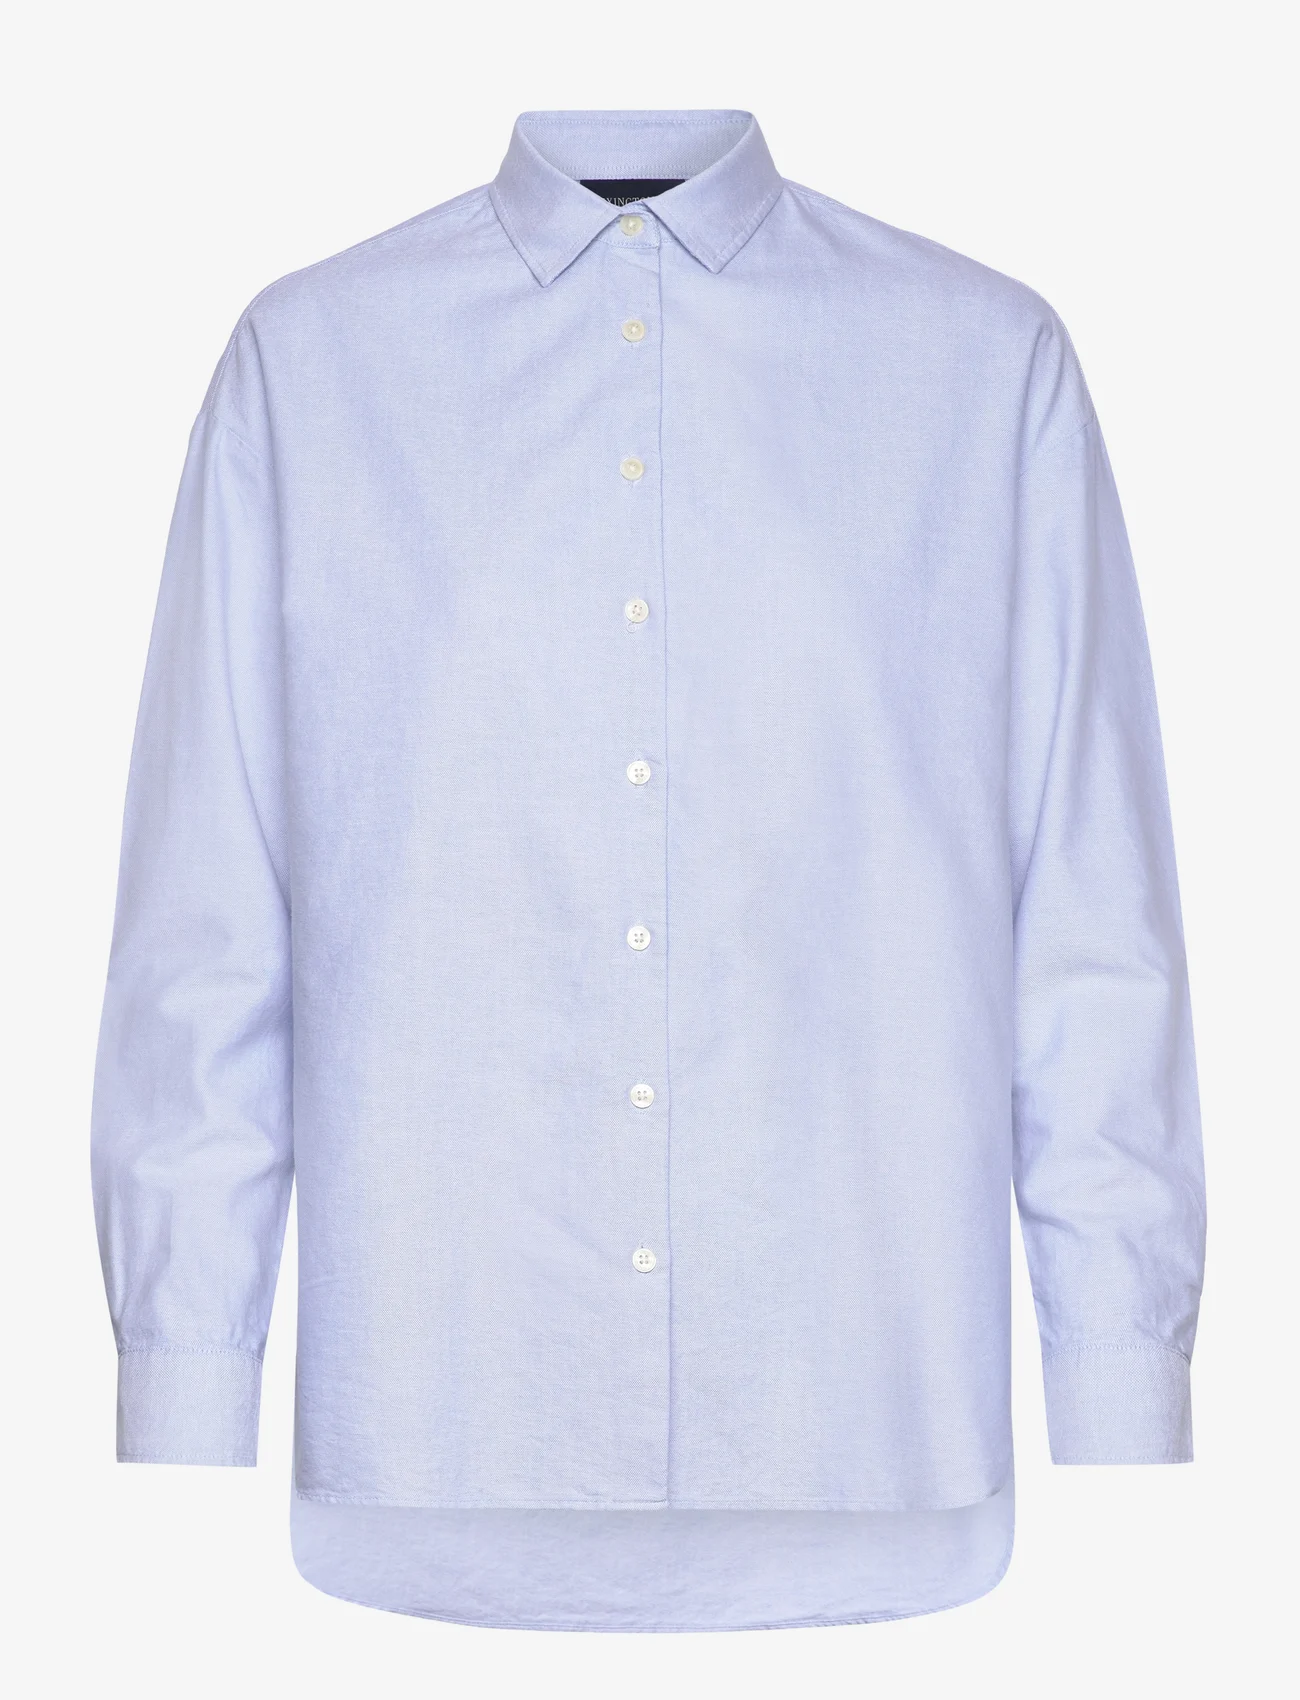 Lexington Clothing - Edith Organic Cotton Oxford Shirt - langärmlige hemden - light blue - 0